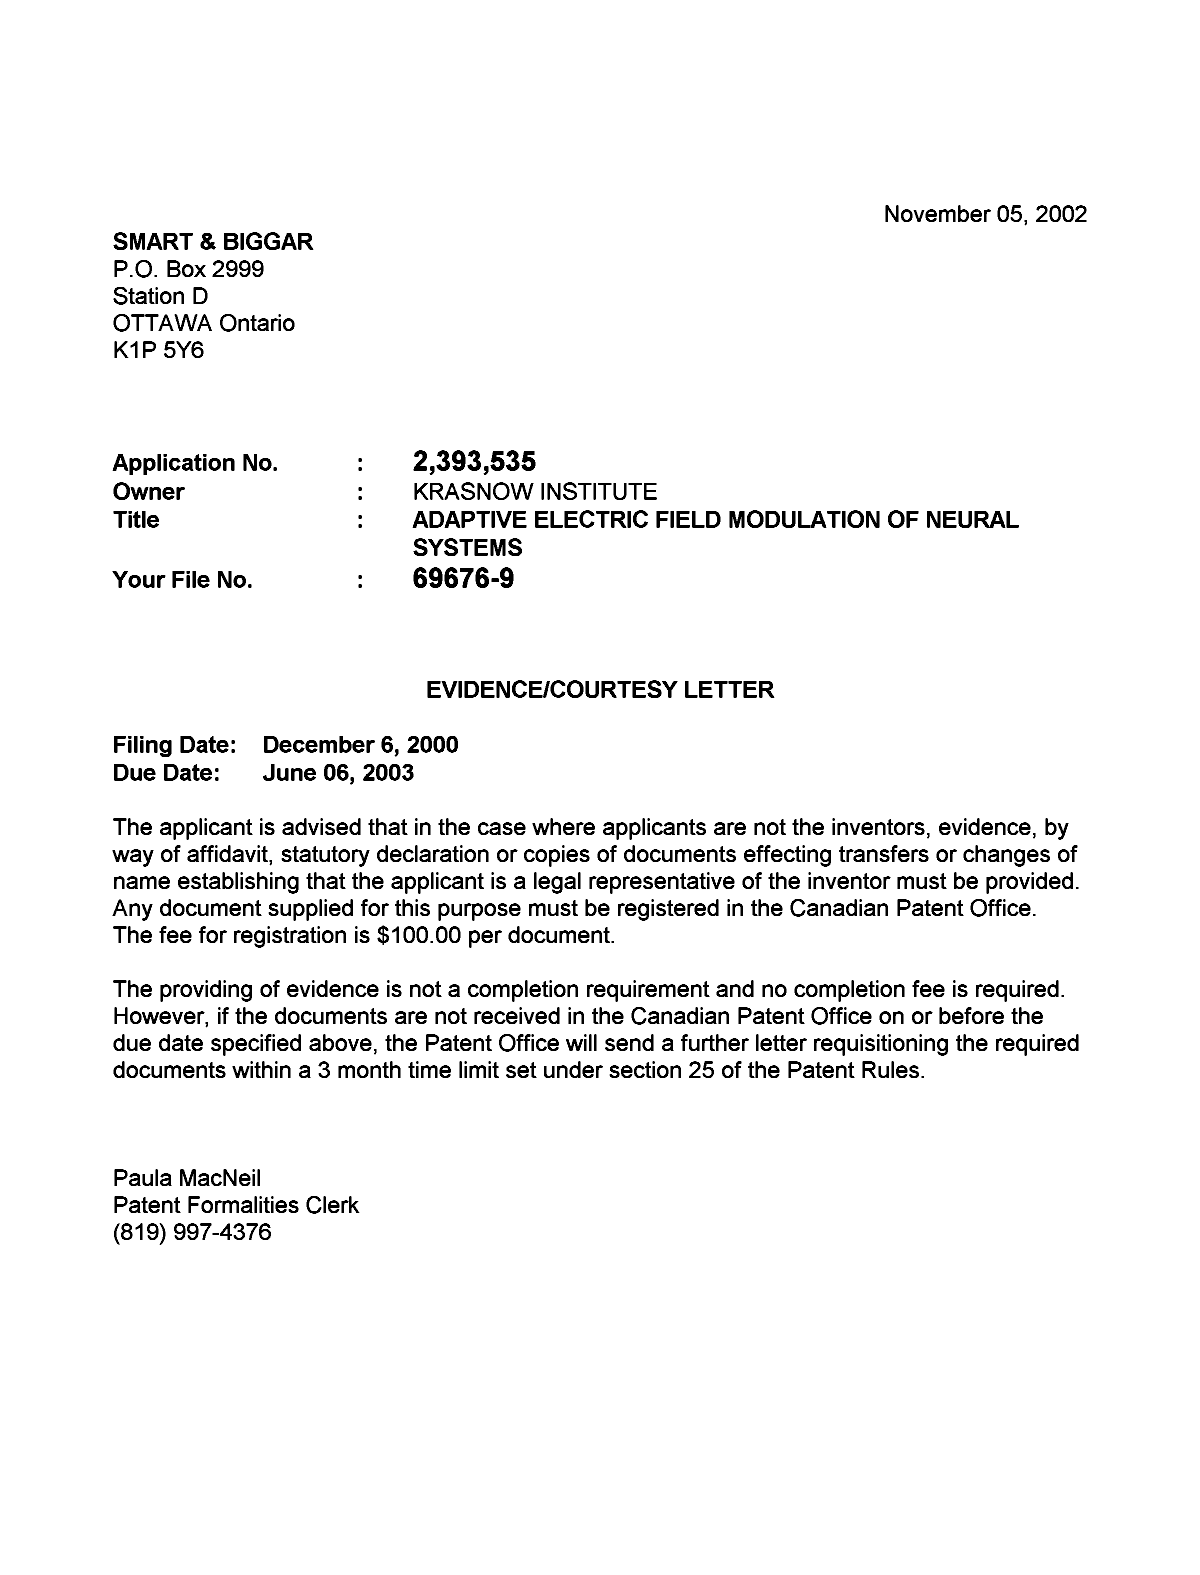 Canadian Patent Document 2393535. Correspondence 20021101. Image 1 of 1